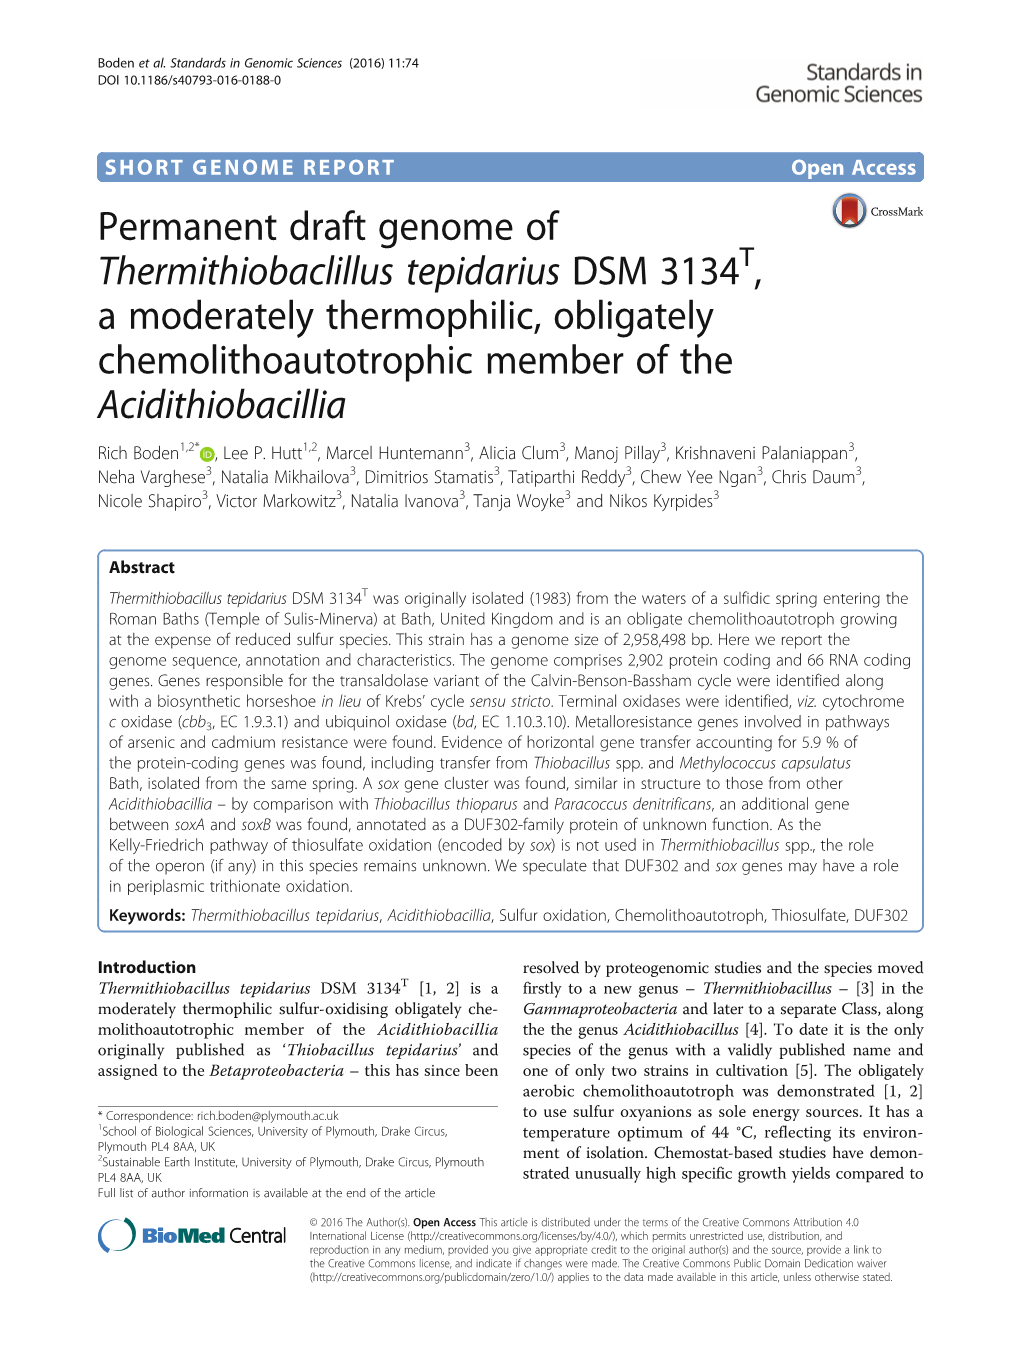 Permanent Draft Genome of Thermithiobaclillus Tepidarius DSM 3134T, a Moderately Thermophilic, Obligately Chemolithoautotrophic Member of the Acidithiobacillia